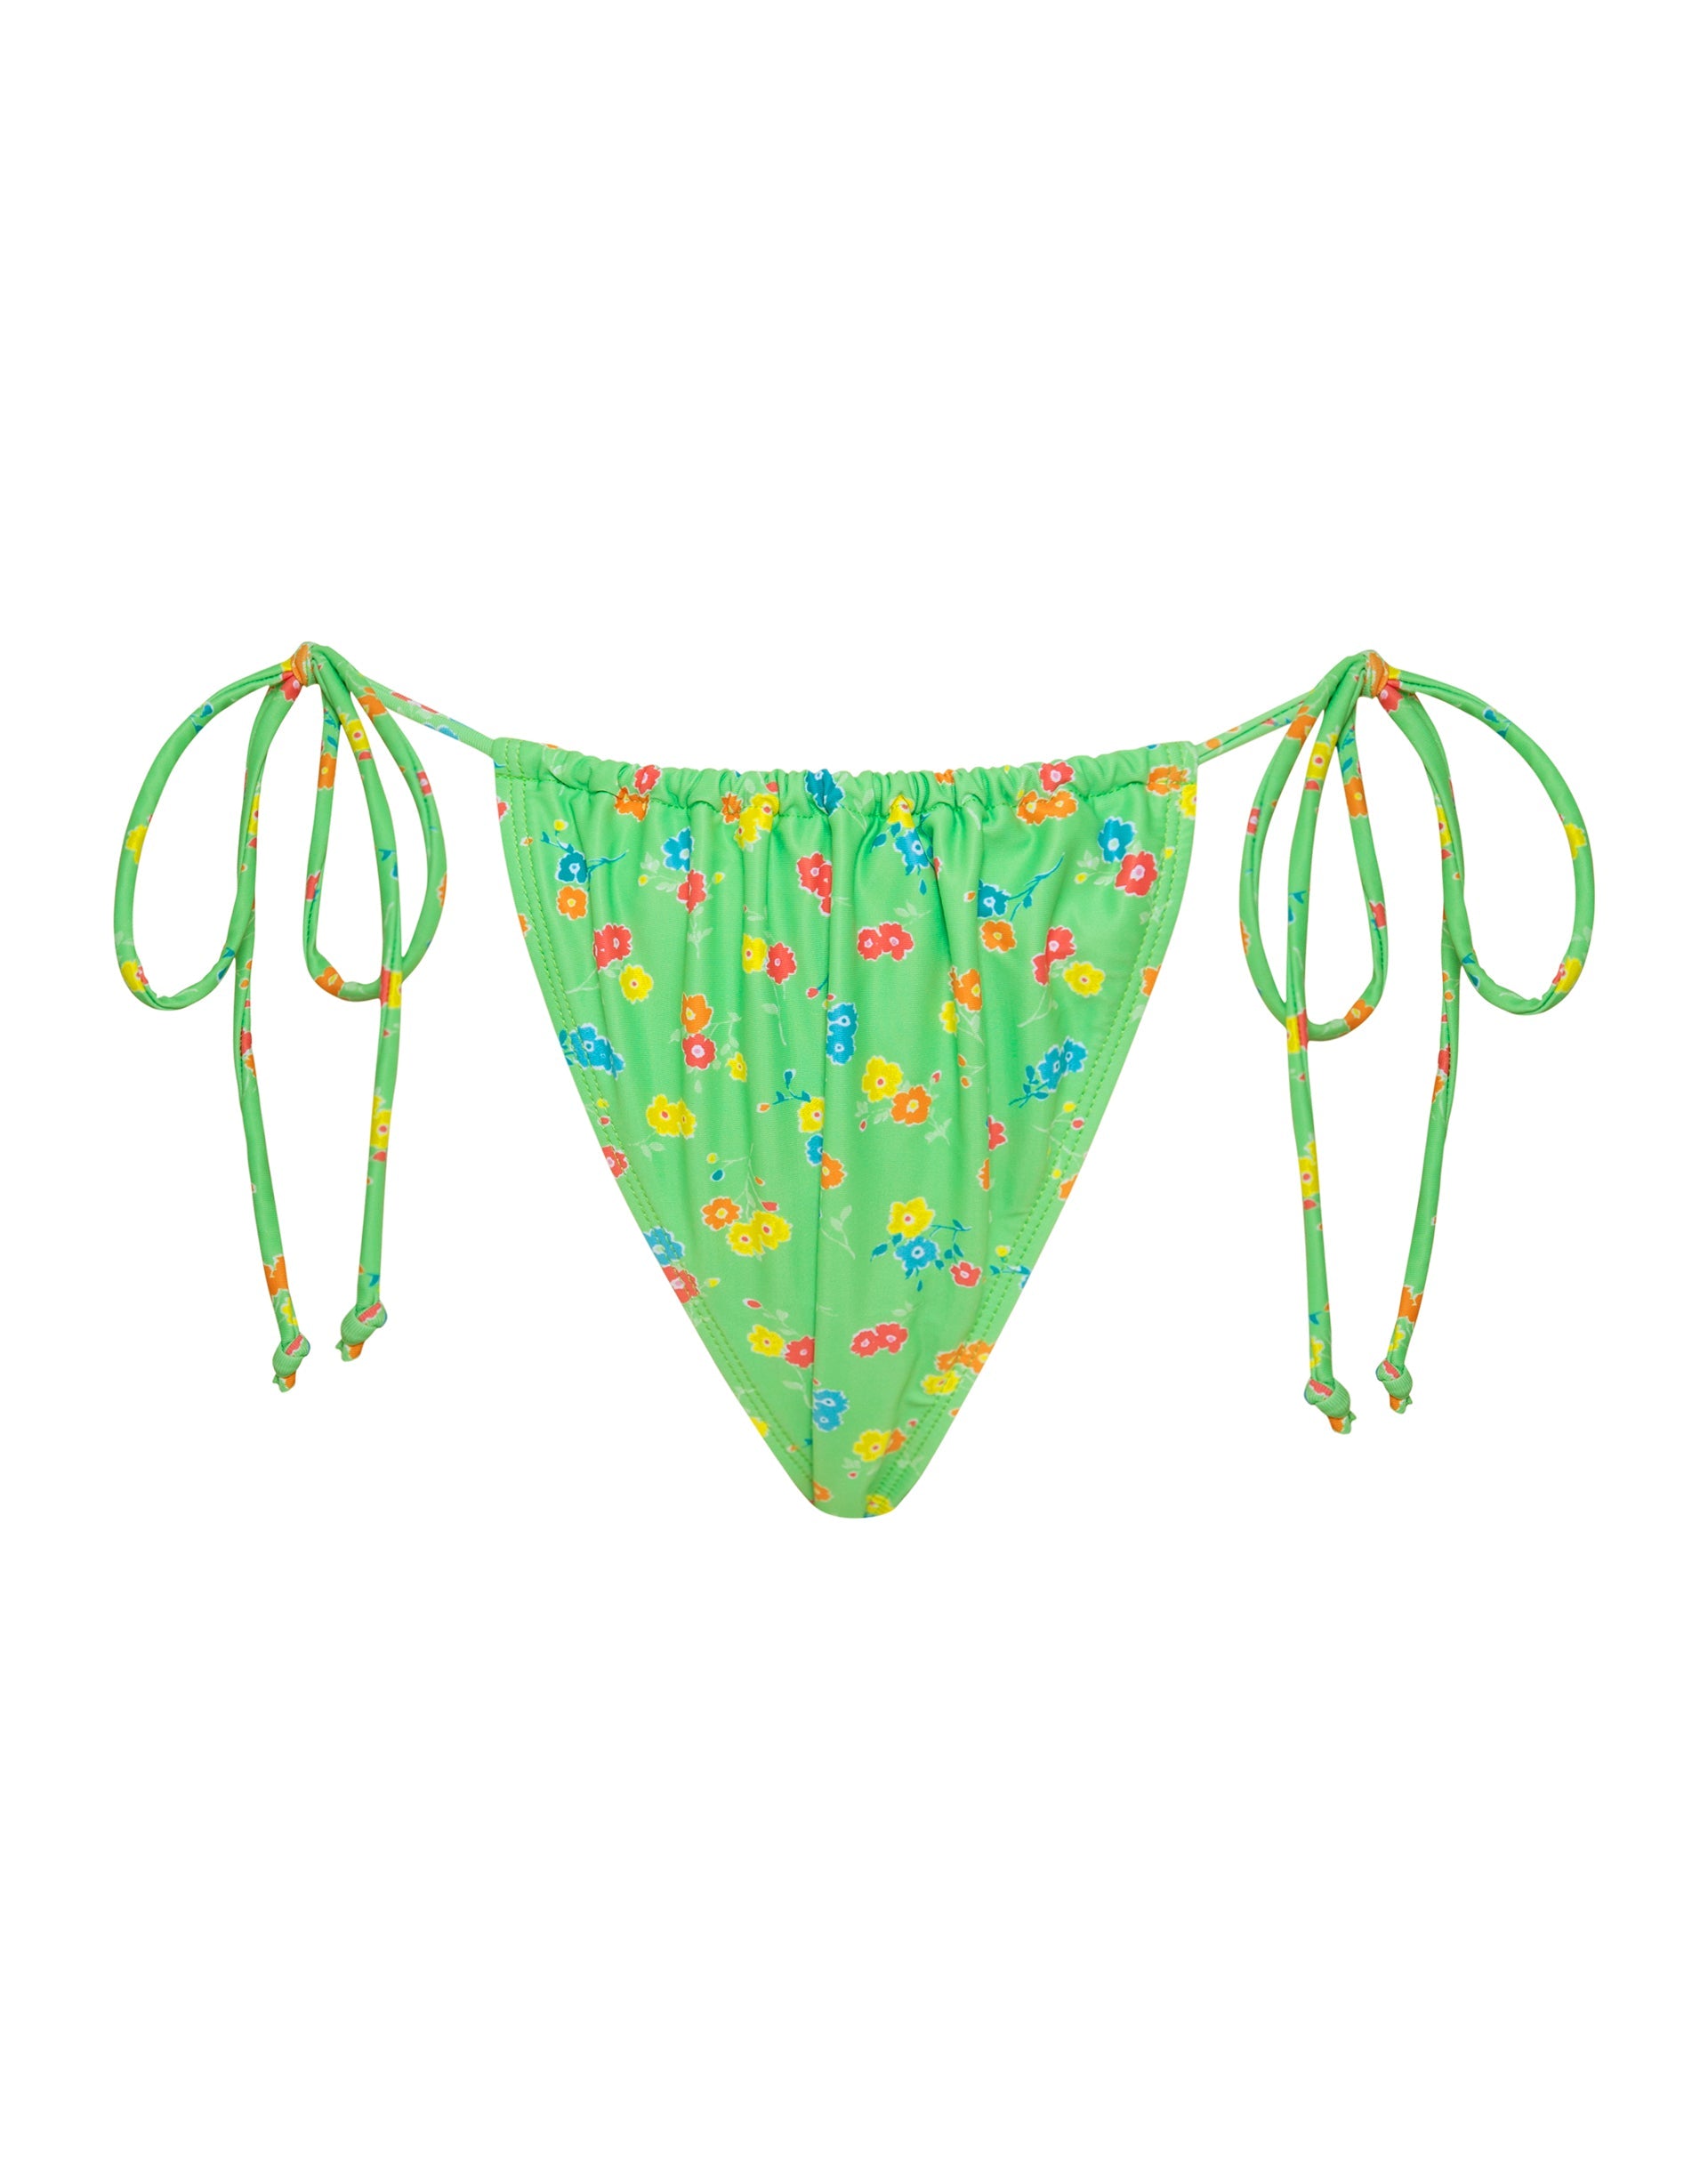 Imagen de la braguita de bikini Leyna en verde floral